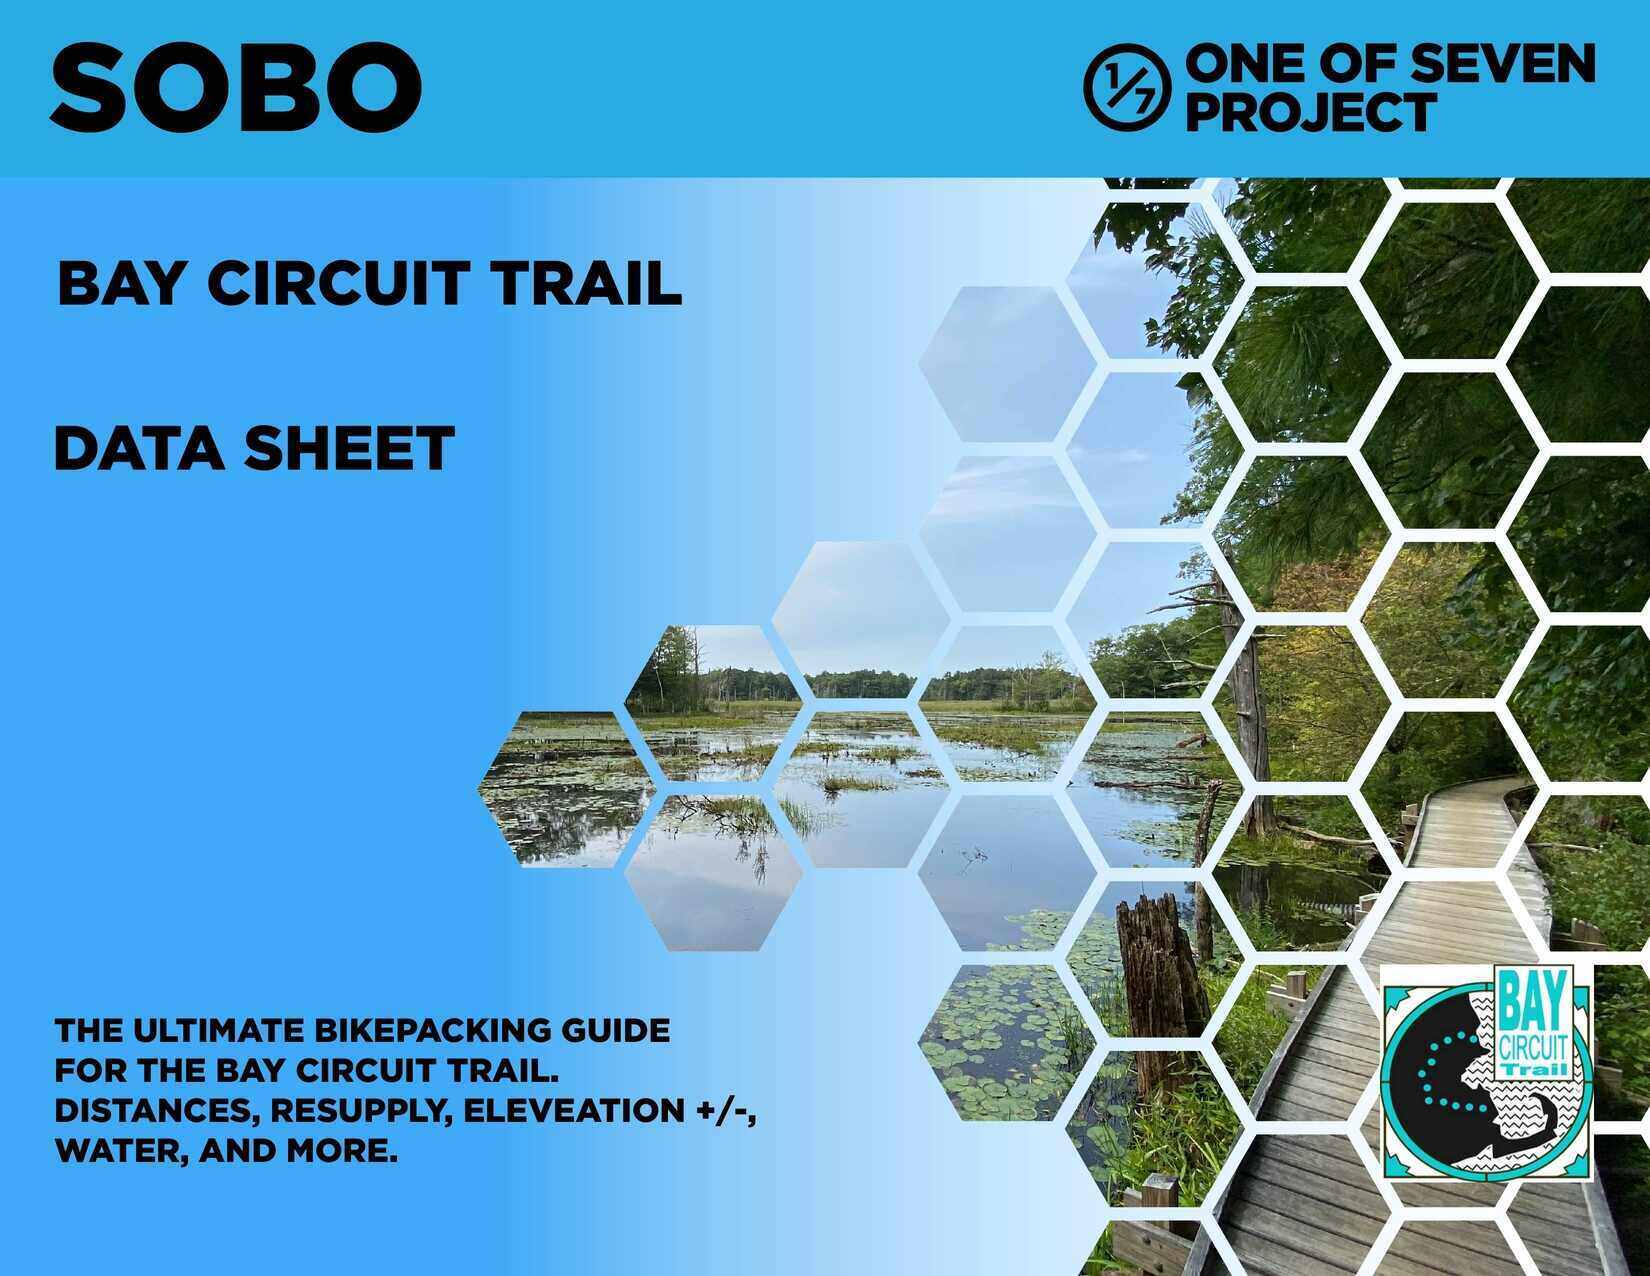 SOBO Data Sheet Cover- Bay Circuit Trail bikeepacking guide planning aids